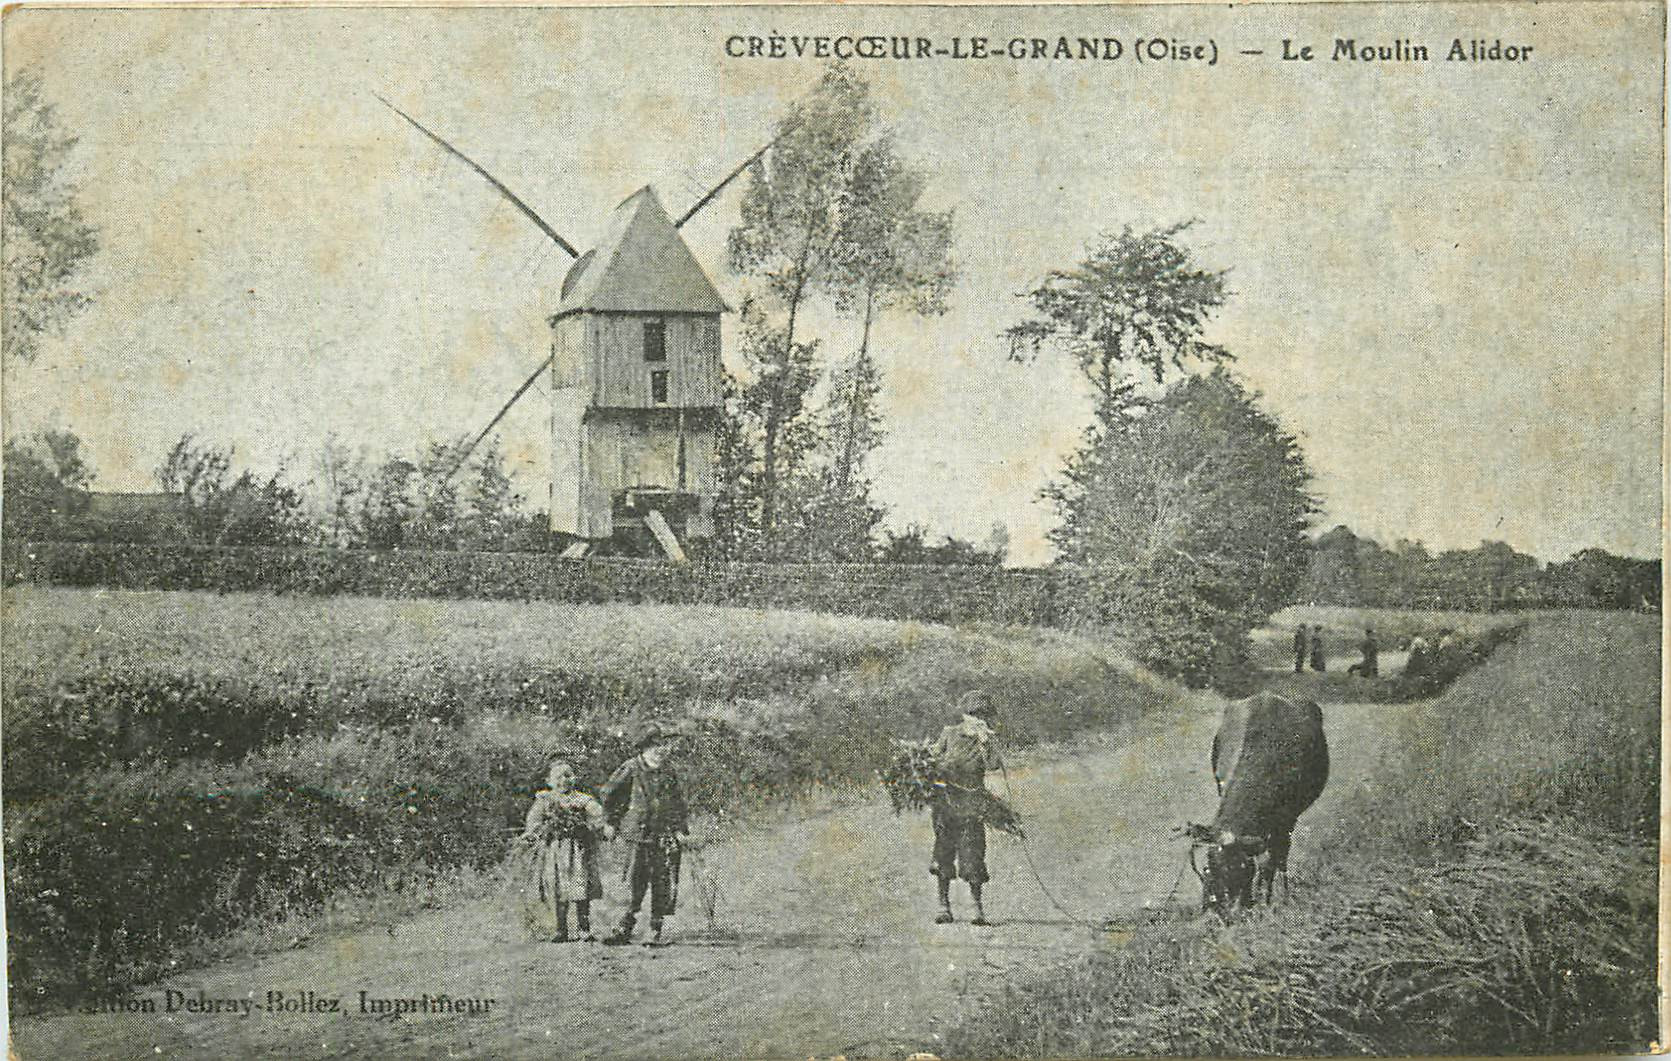 WW 60 CREVECOEUR-LE-GRAND. Le Moulin Alidor et vache